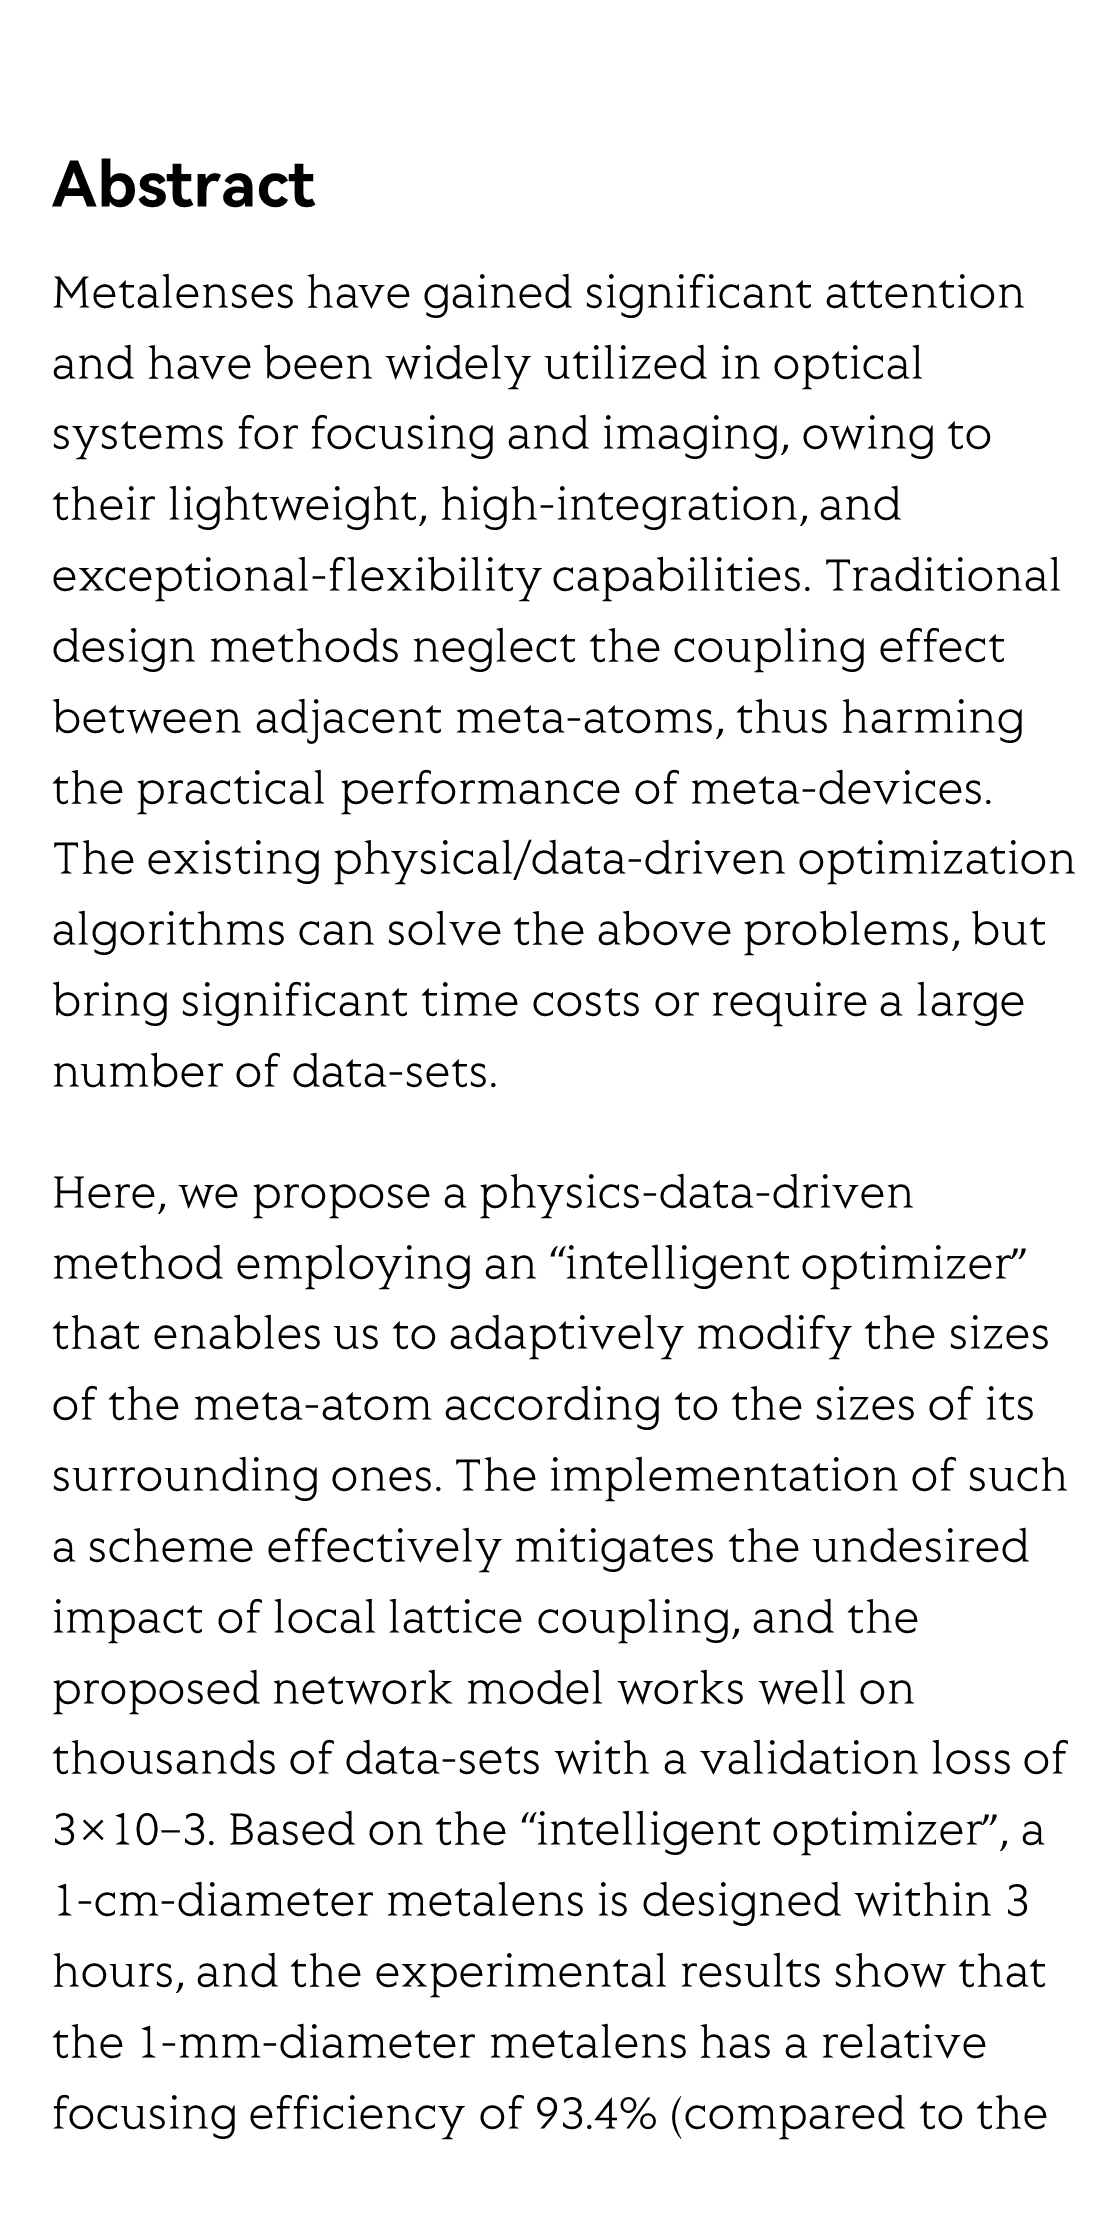 Physics-data-driven intelligent optimization for large-aperture metalenses_2